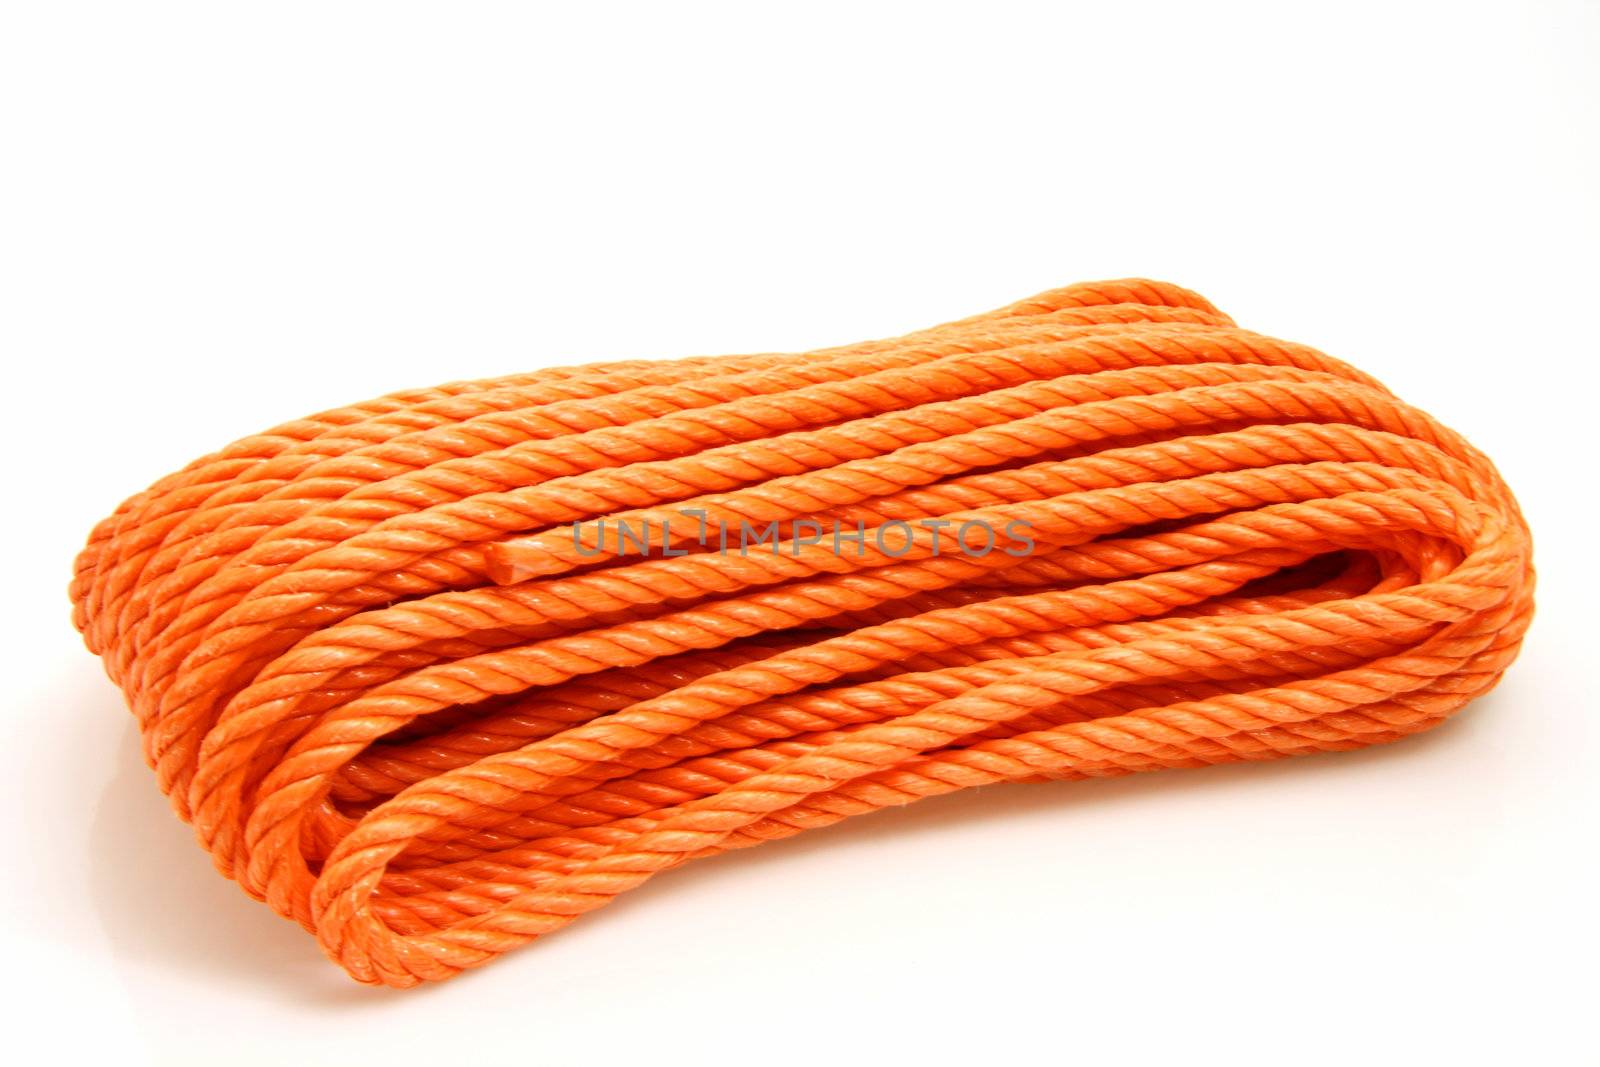 Orange rope on bright background